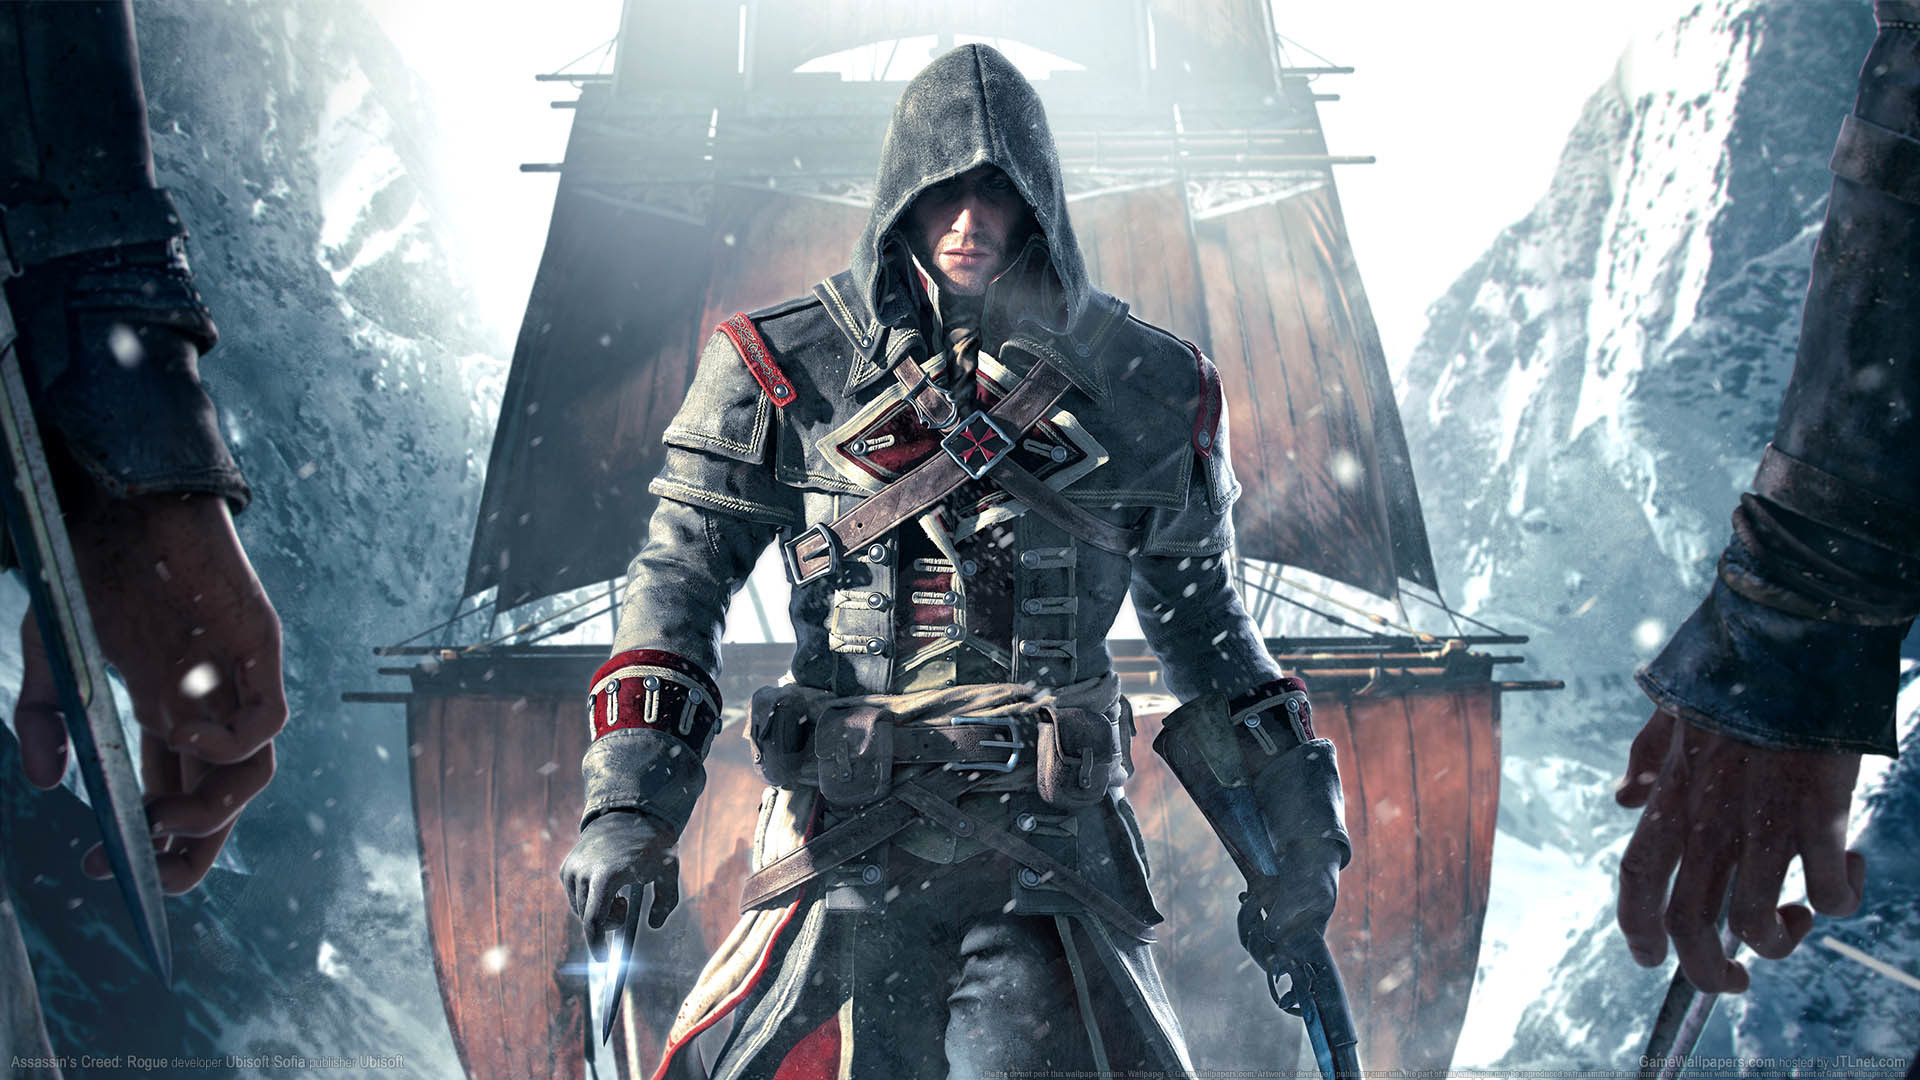 1920x1080 Assassin's Creed: Rogue wallpaper or background Assassin's Creed: Rogue  wallpaper or background 01